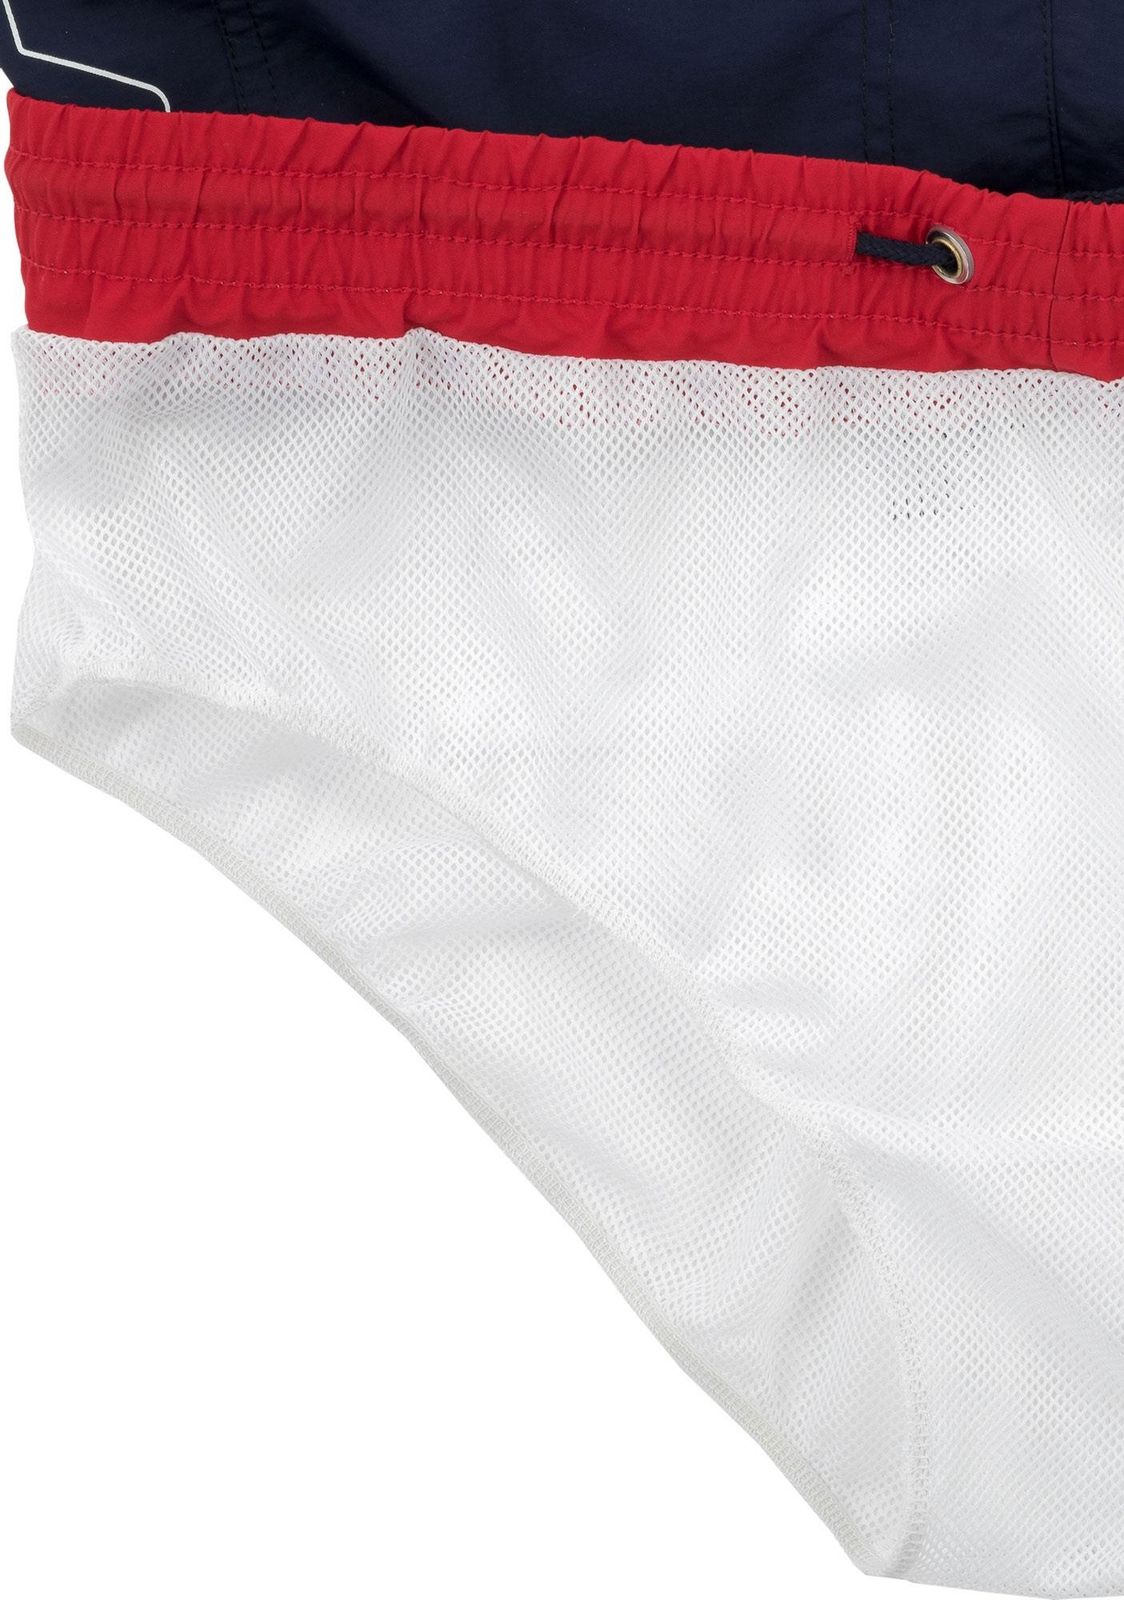   Fila Men's Shorts, : -. S19AFLSHM03-Z4.  L (50)